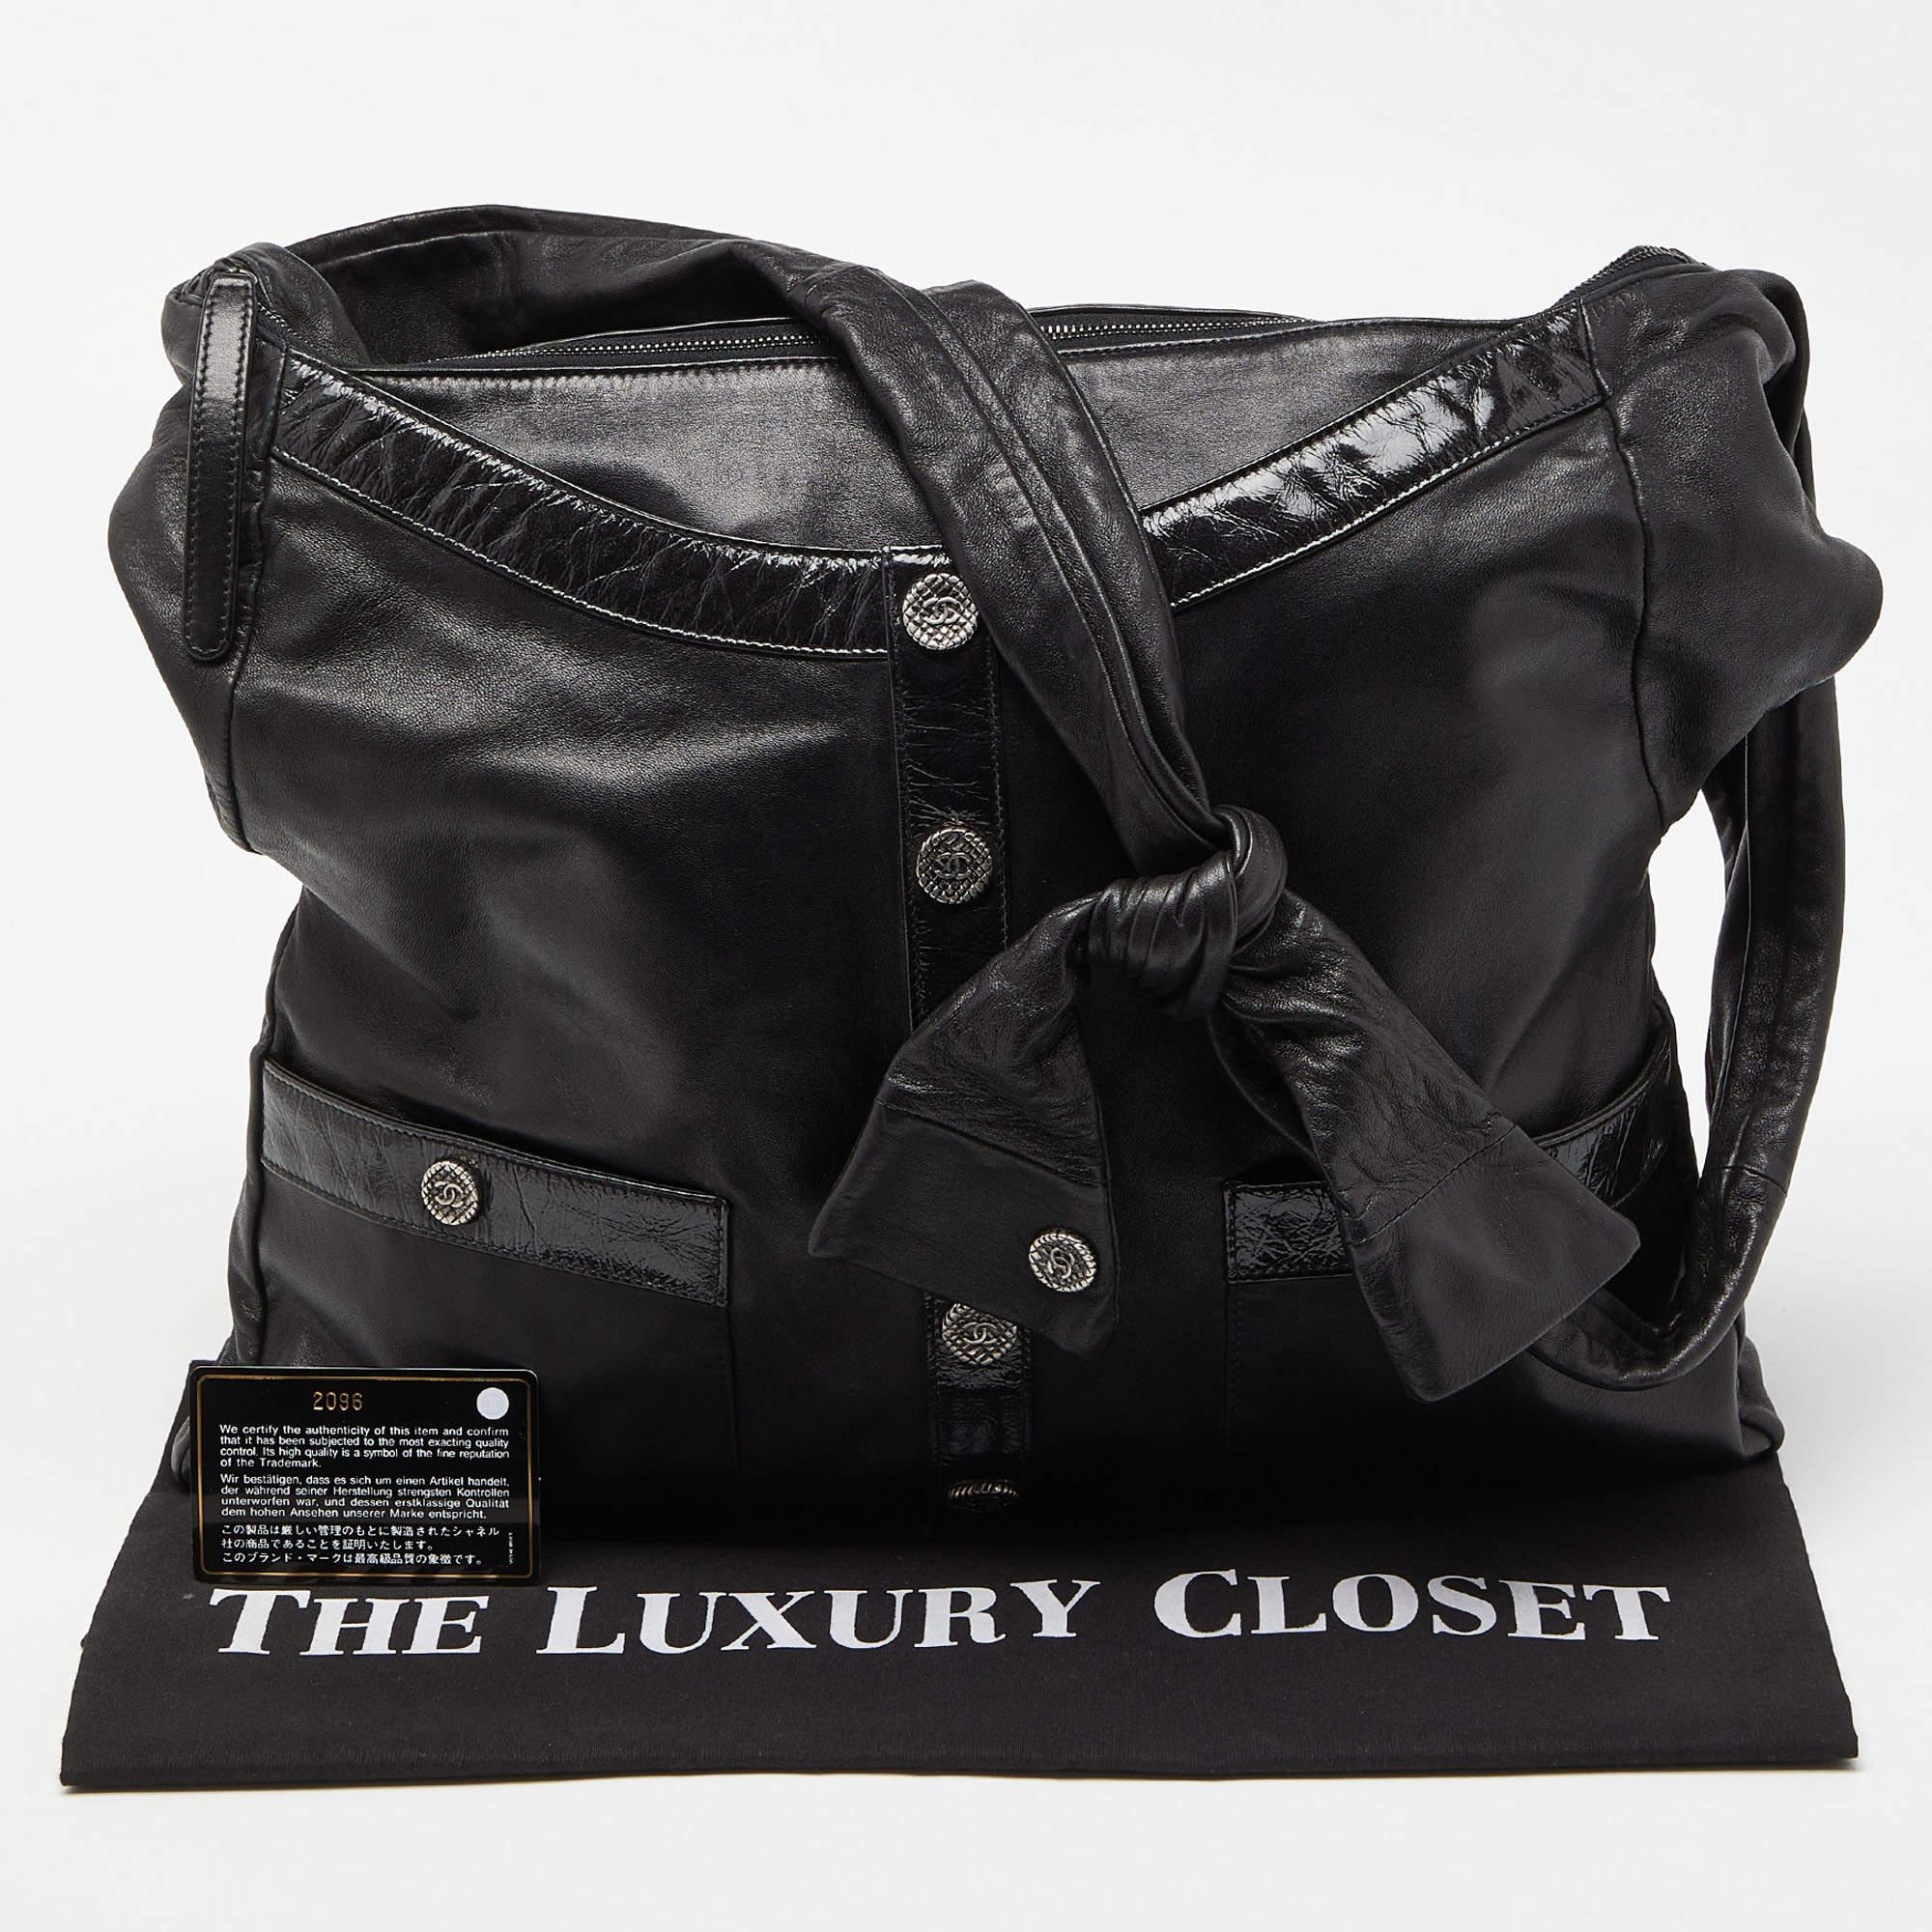 Chanel Black Leather Large Girl Chanel Bag For Sale 2